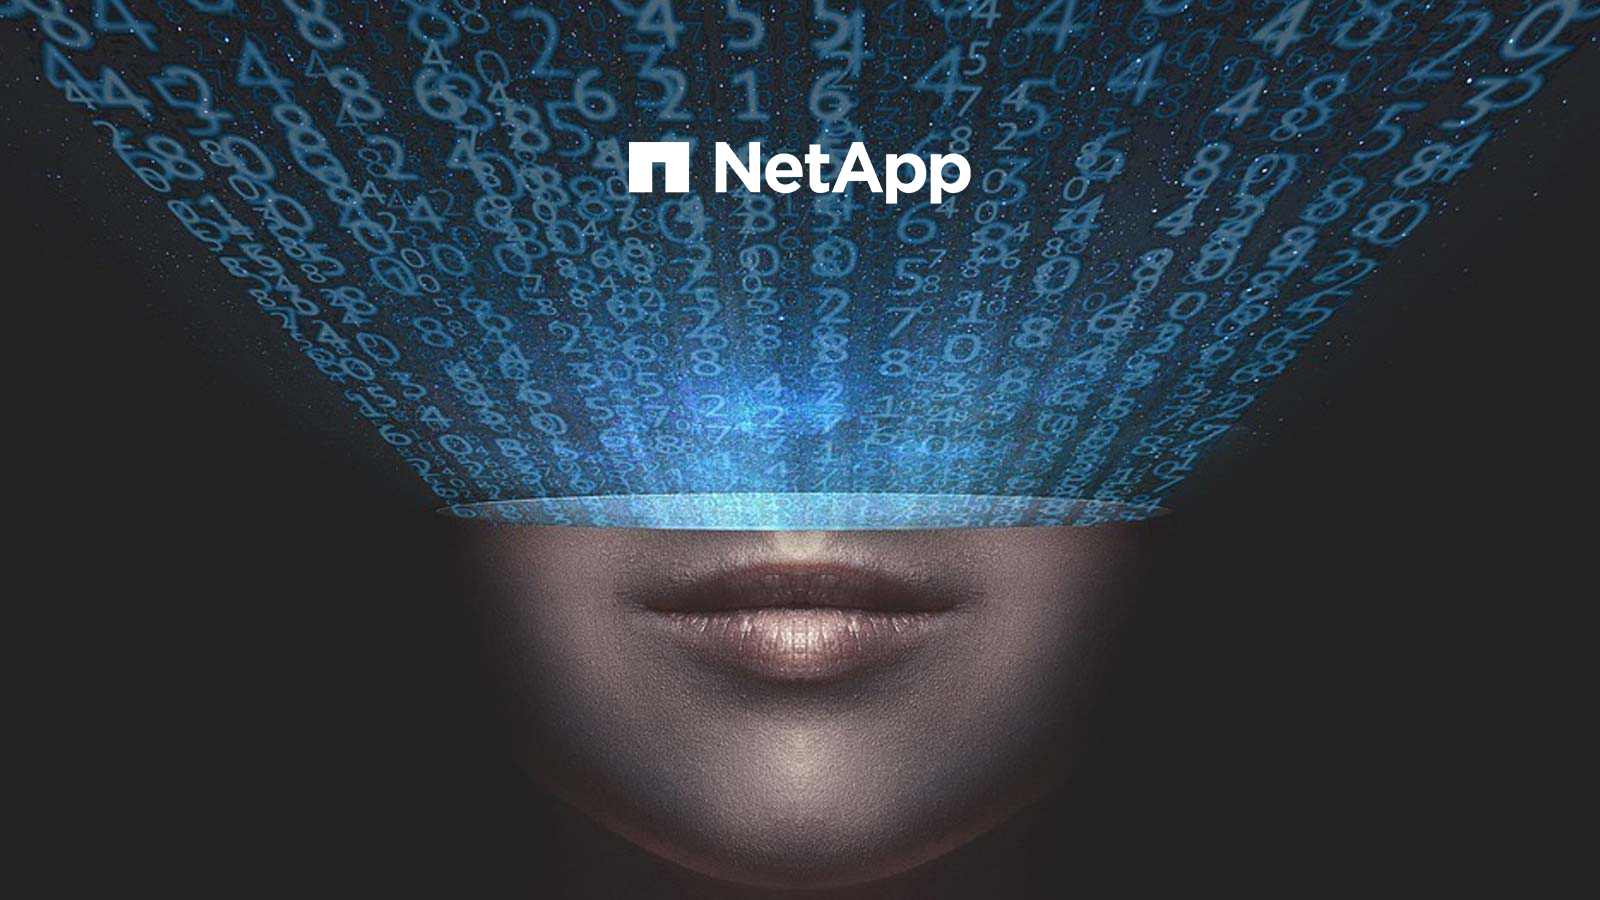 NetApp Global Partnership with Ducati